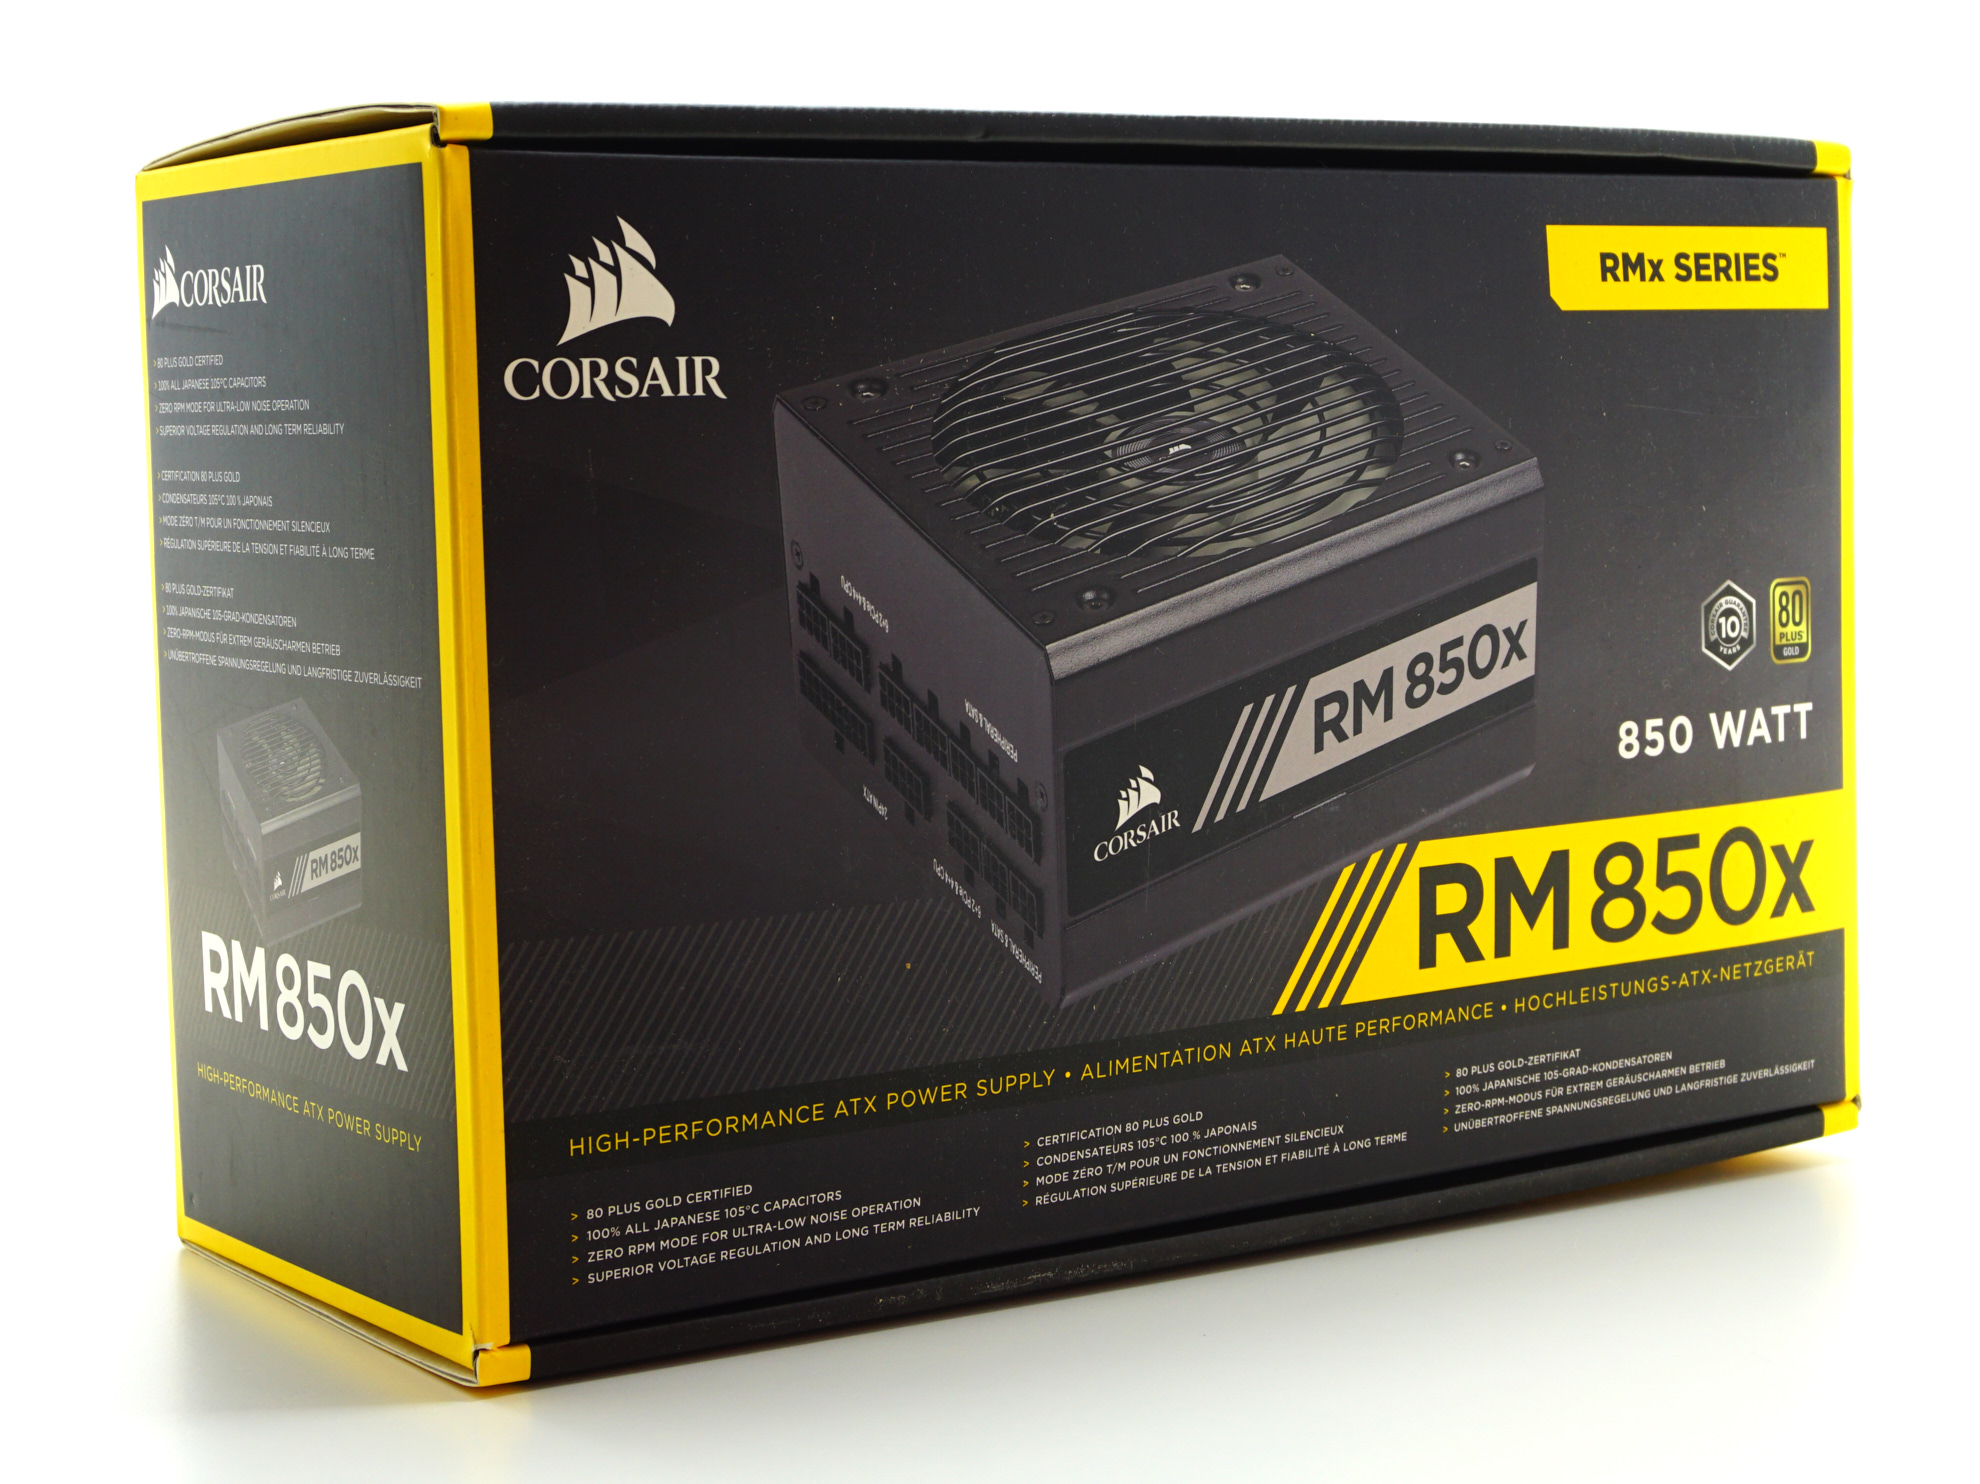 The Corsair RM850x (2018) PSU Electrical Performance